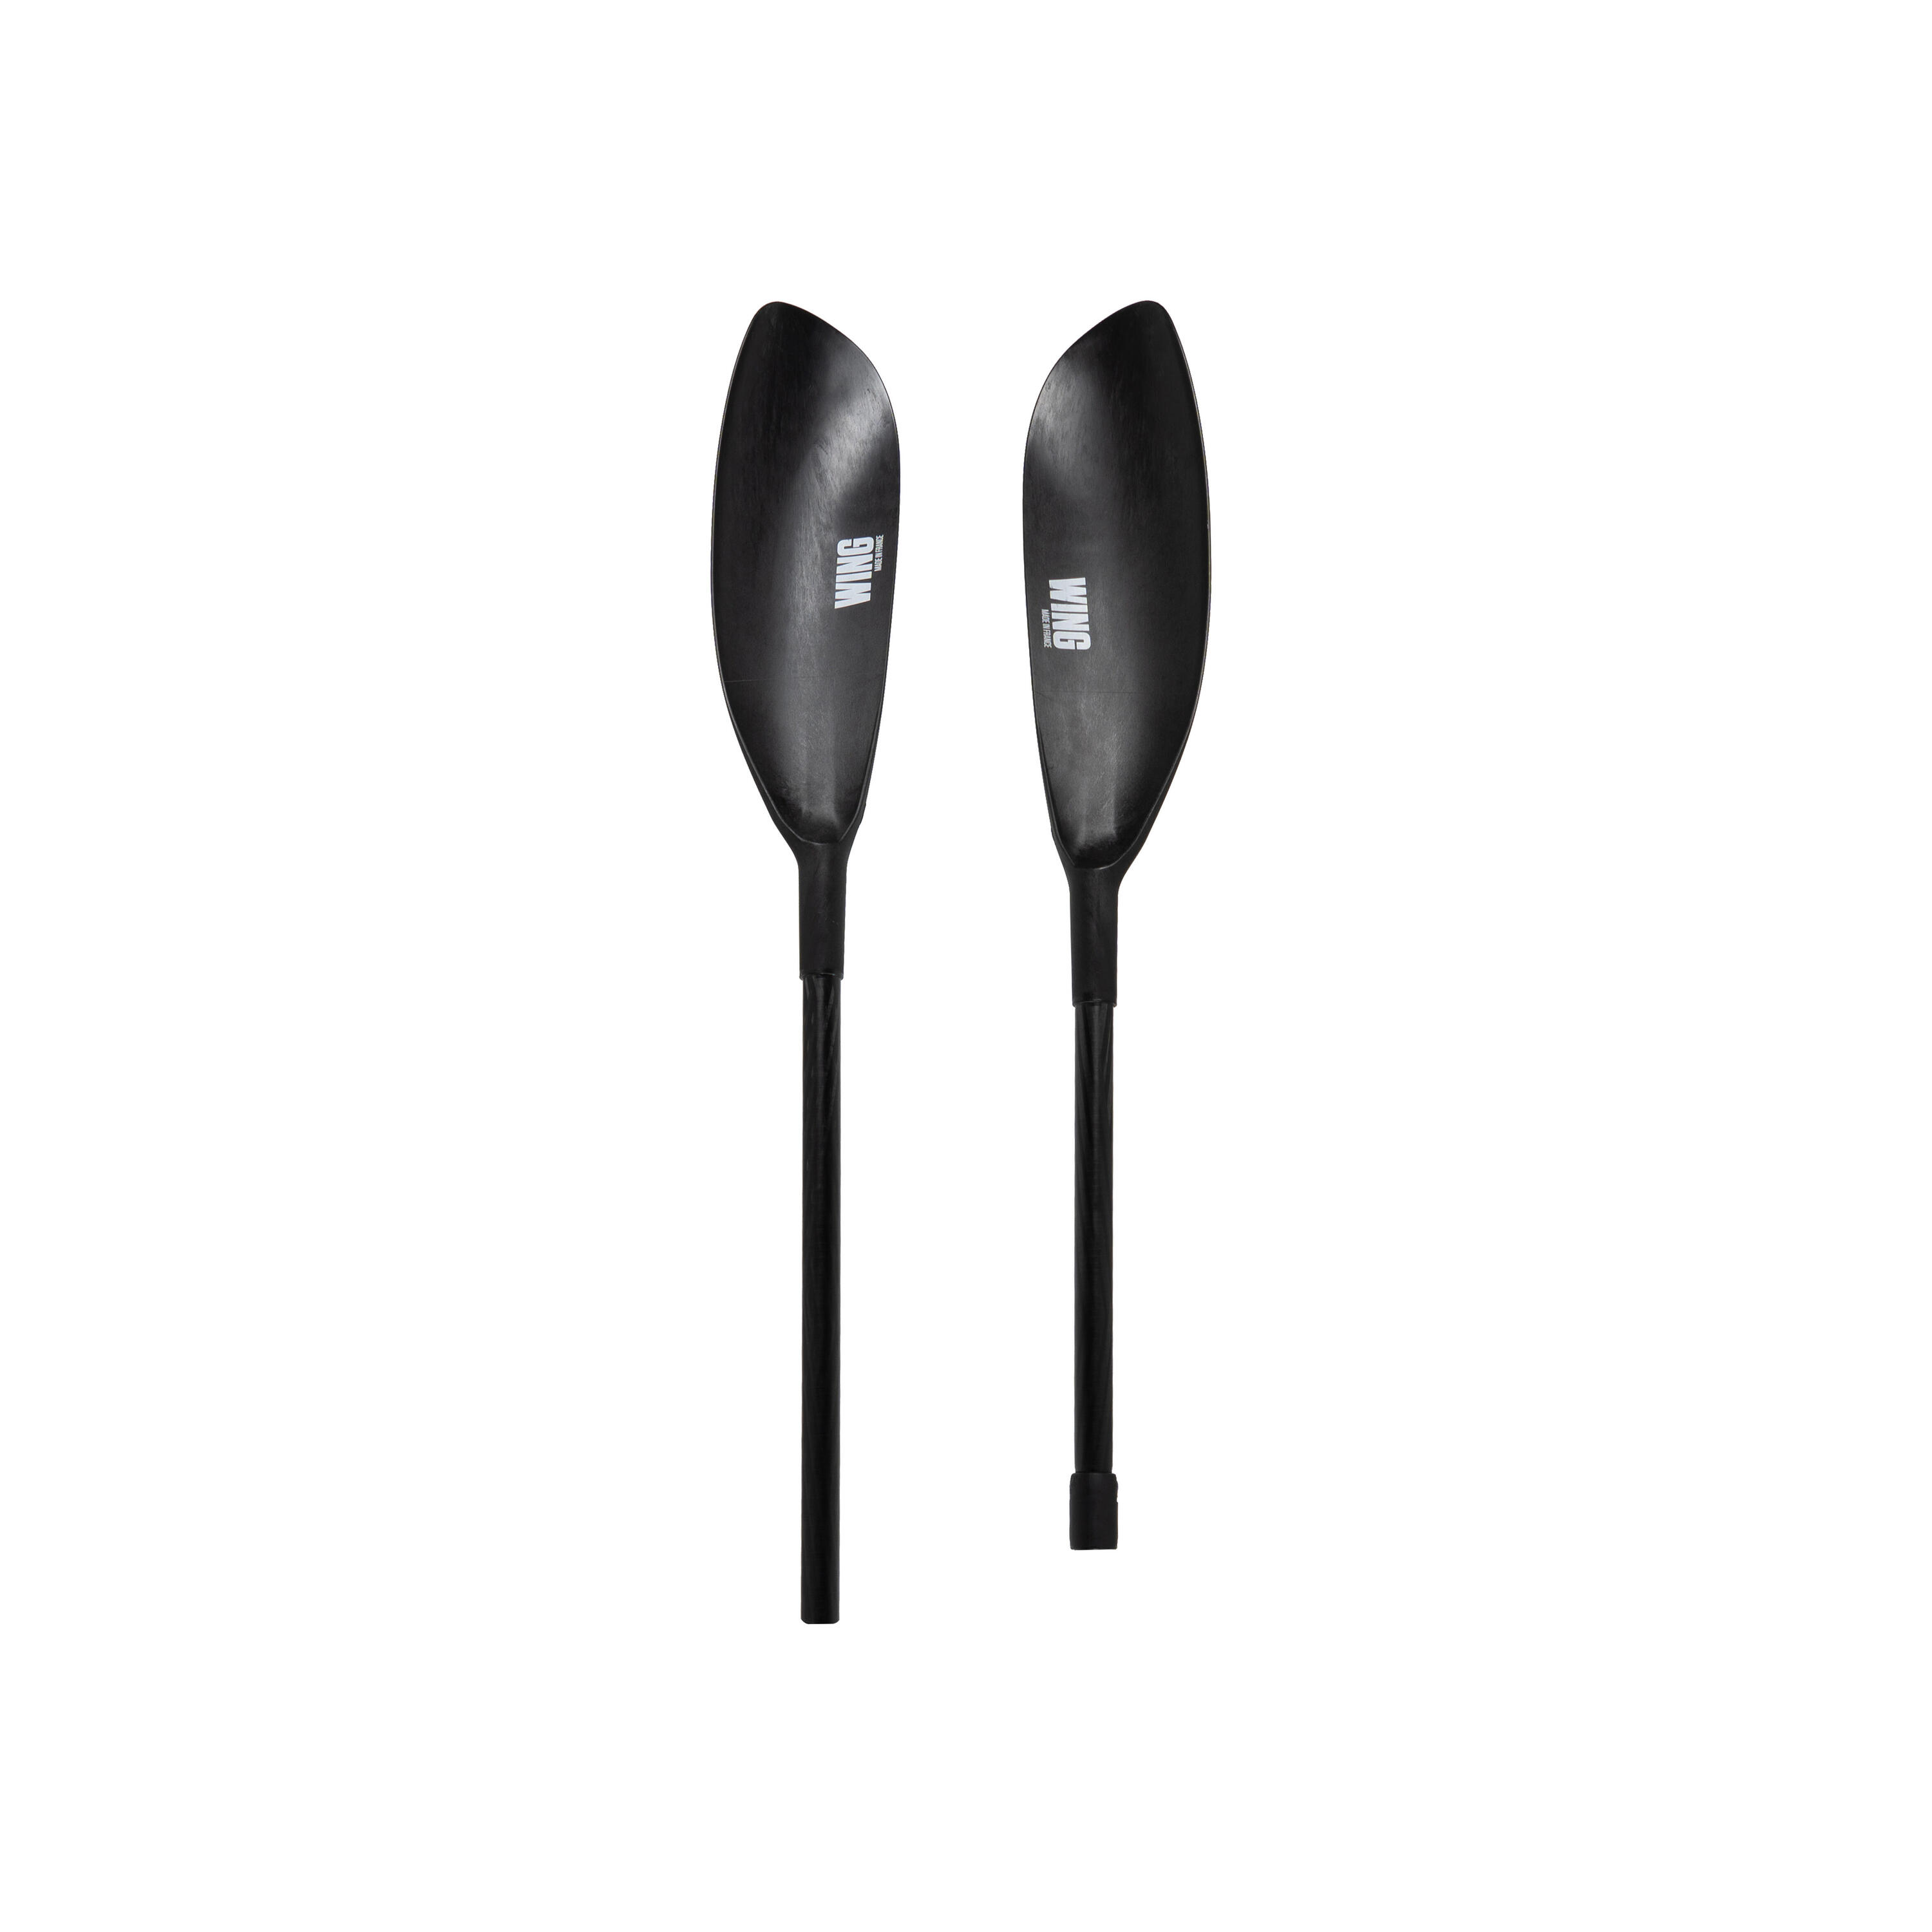 Kayak spoon paddle - carbon and fibreglass - adjustable / 2 sections - Rotomod 2/13